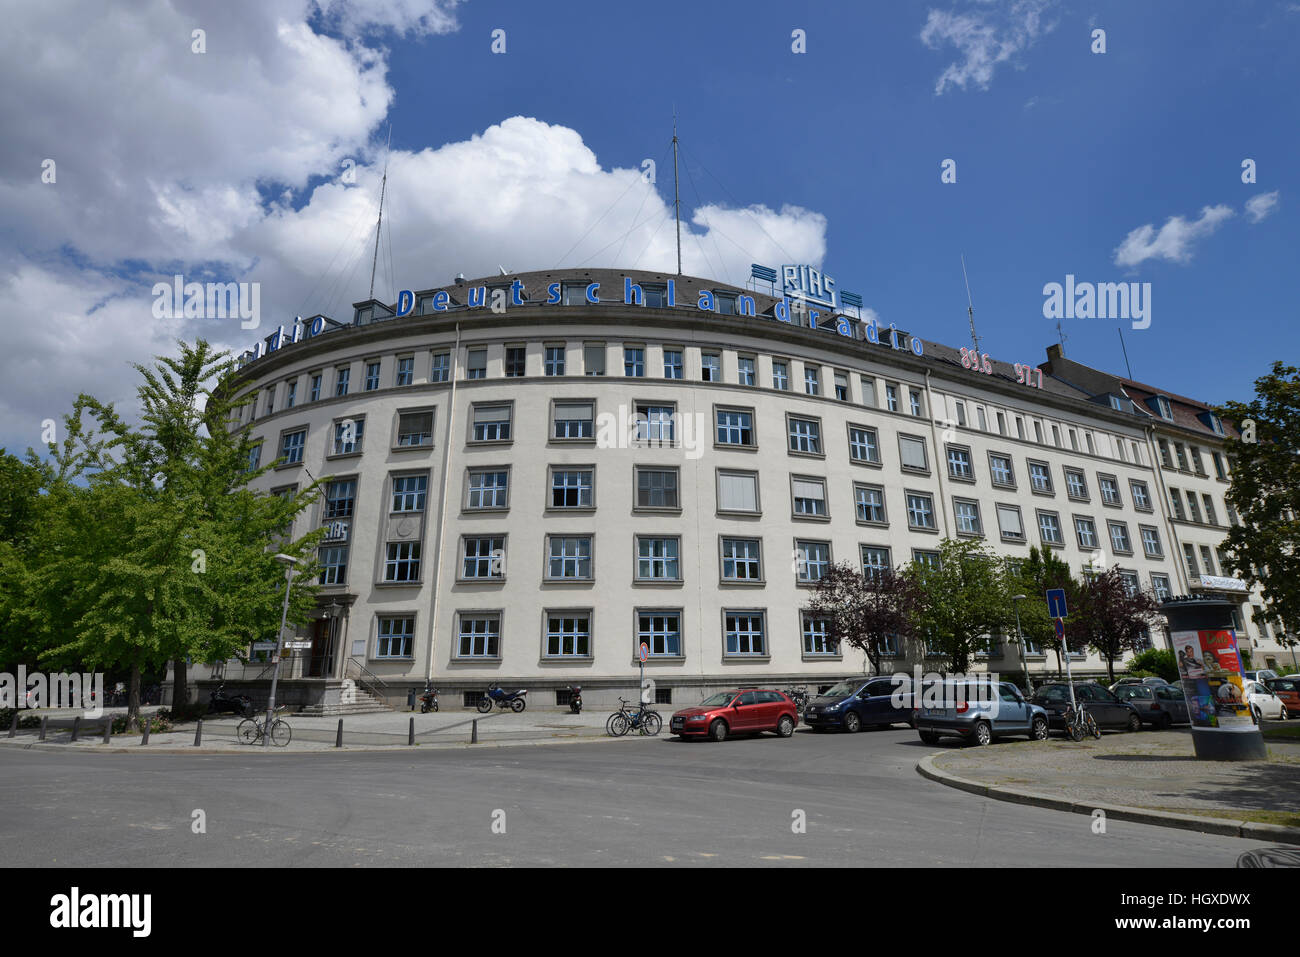 RIAS-Haus, Hans-Rosenthal-Platz, Schoeneberg, Berlin, Deutschland Banque D'Images